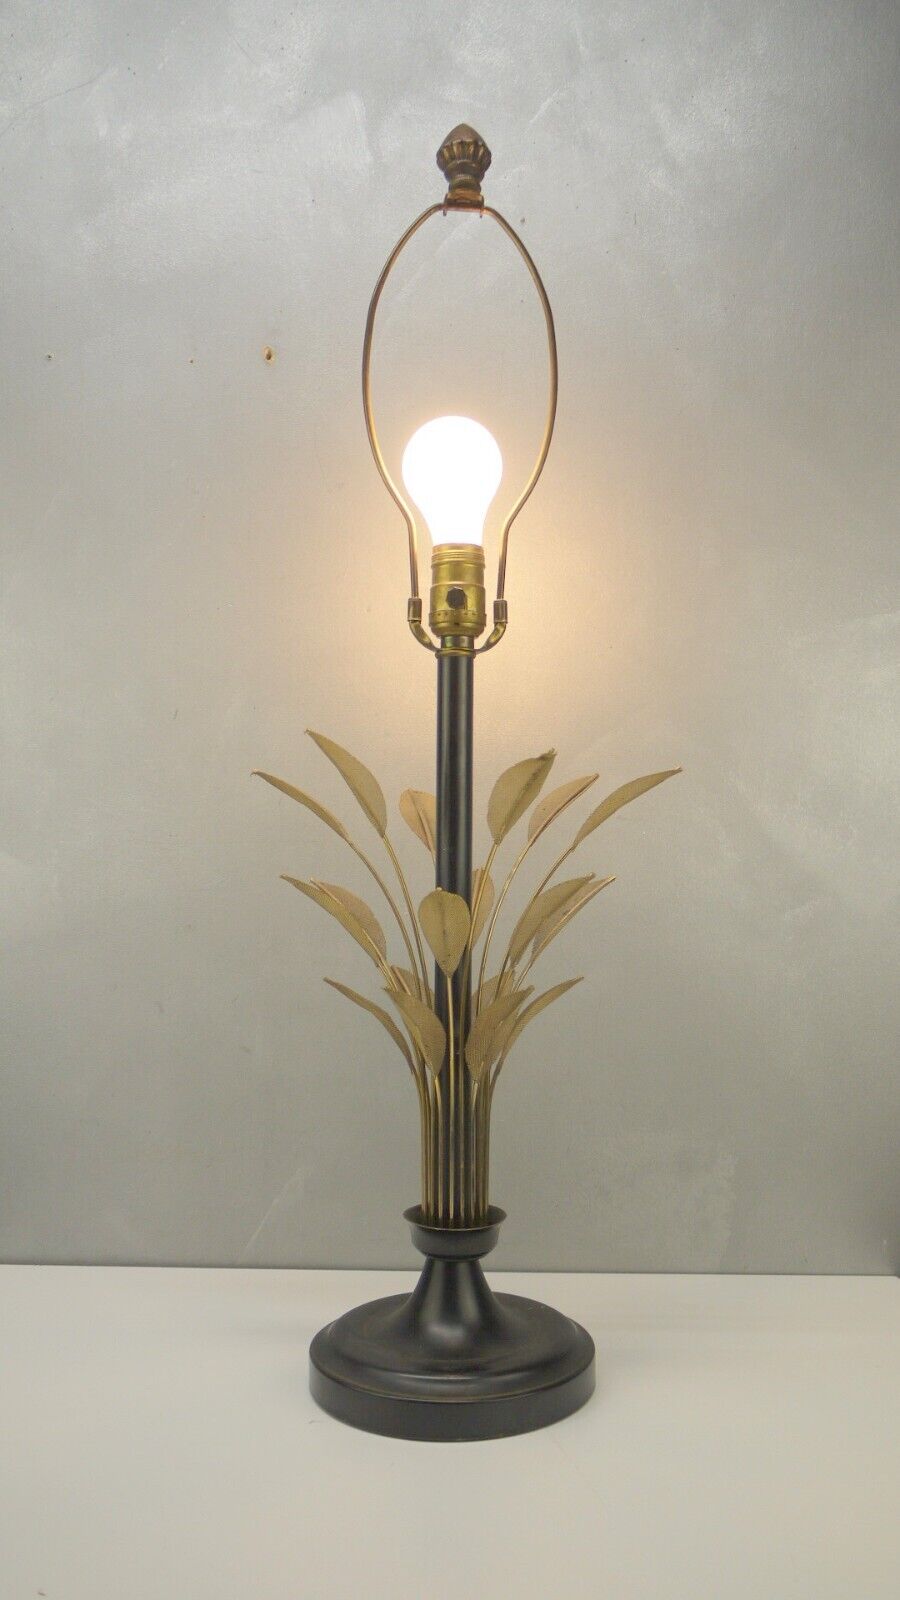 VTG Hollywood Regency Mid Century MODERN Gilt Leaf Desk Lamp ITMO Paavo Tynell